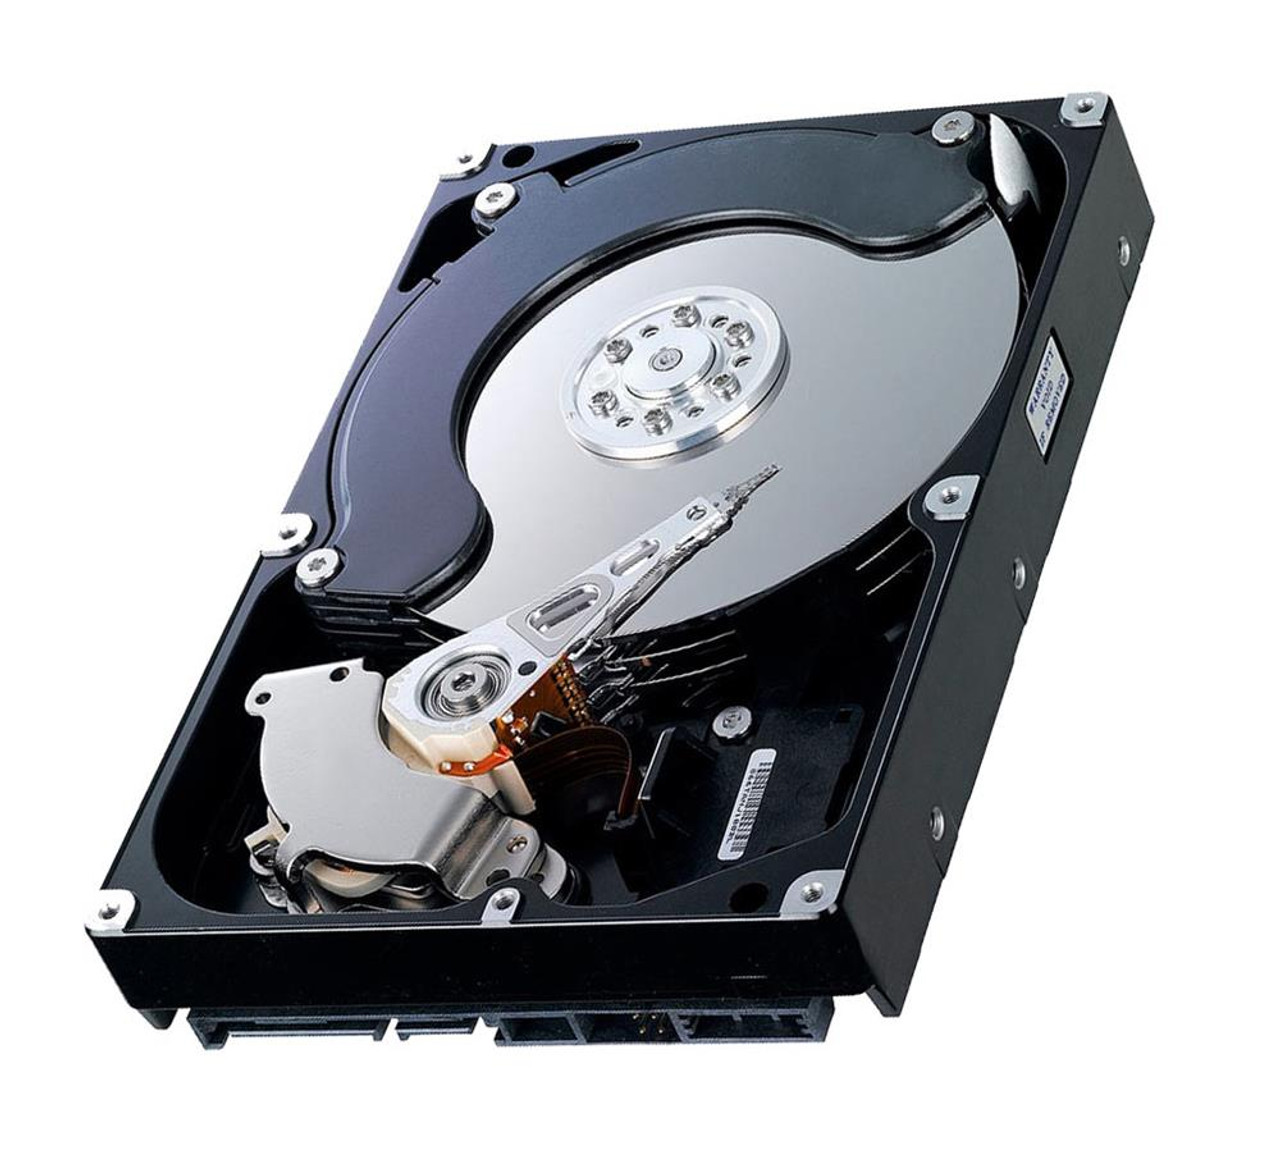 WD400AB-00CDB0 - Western Digital Caviar 40GB 5400RPM ATA-100 2MB Cache 3.5-inch Hard Disk Drive